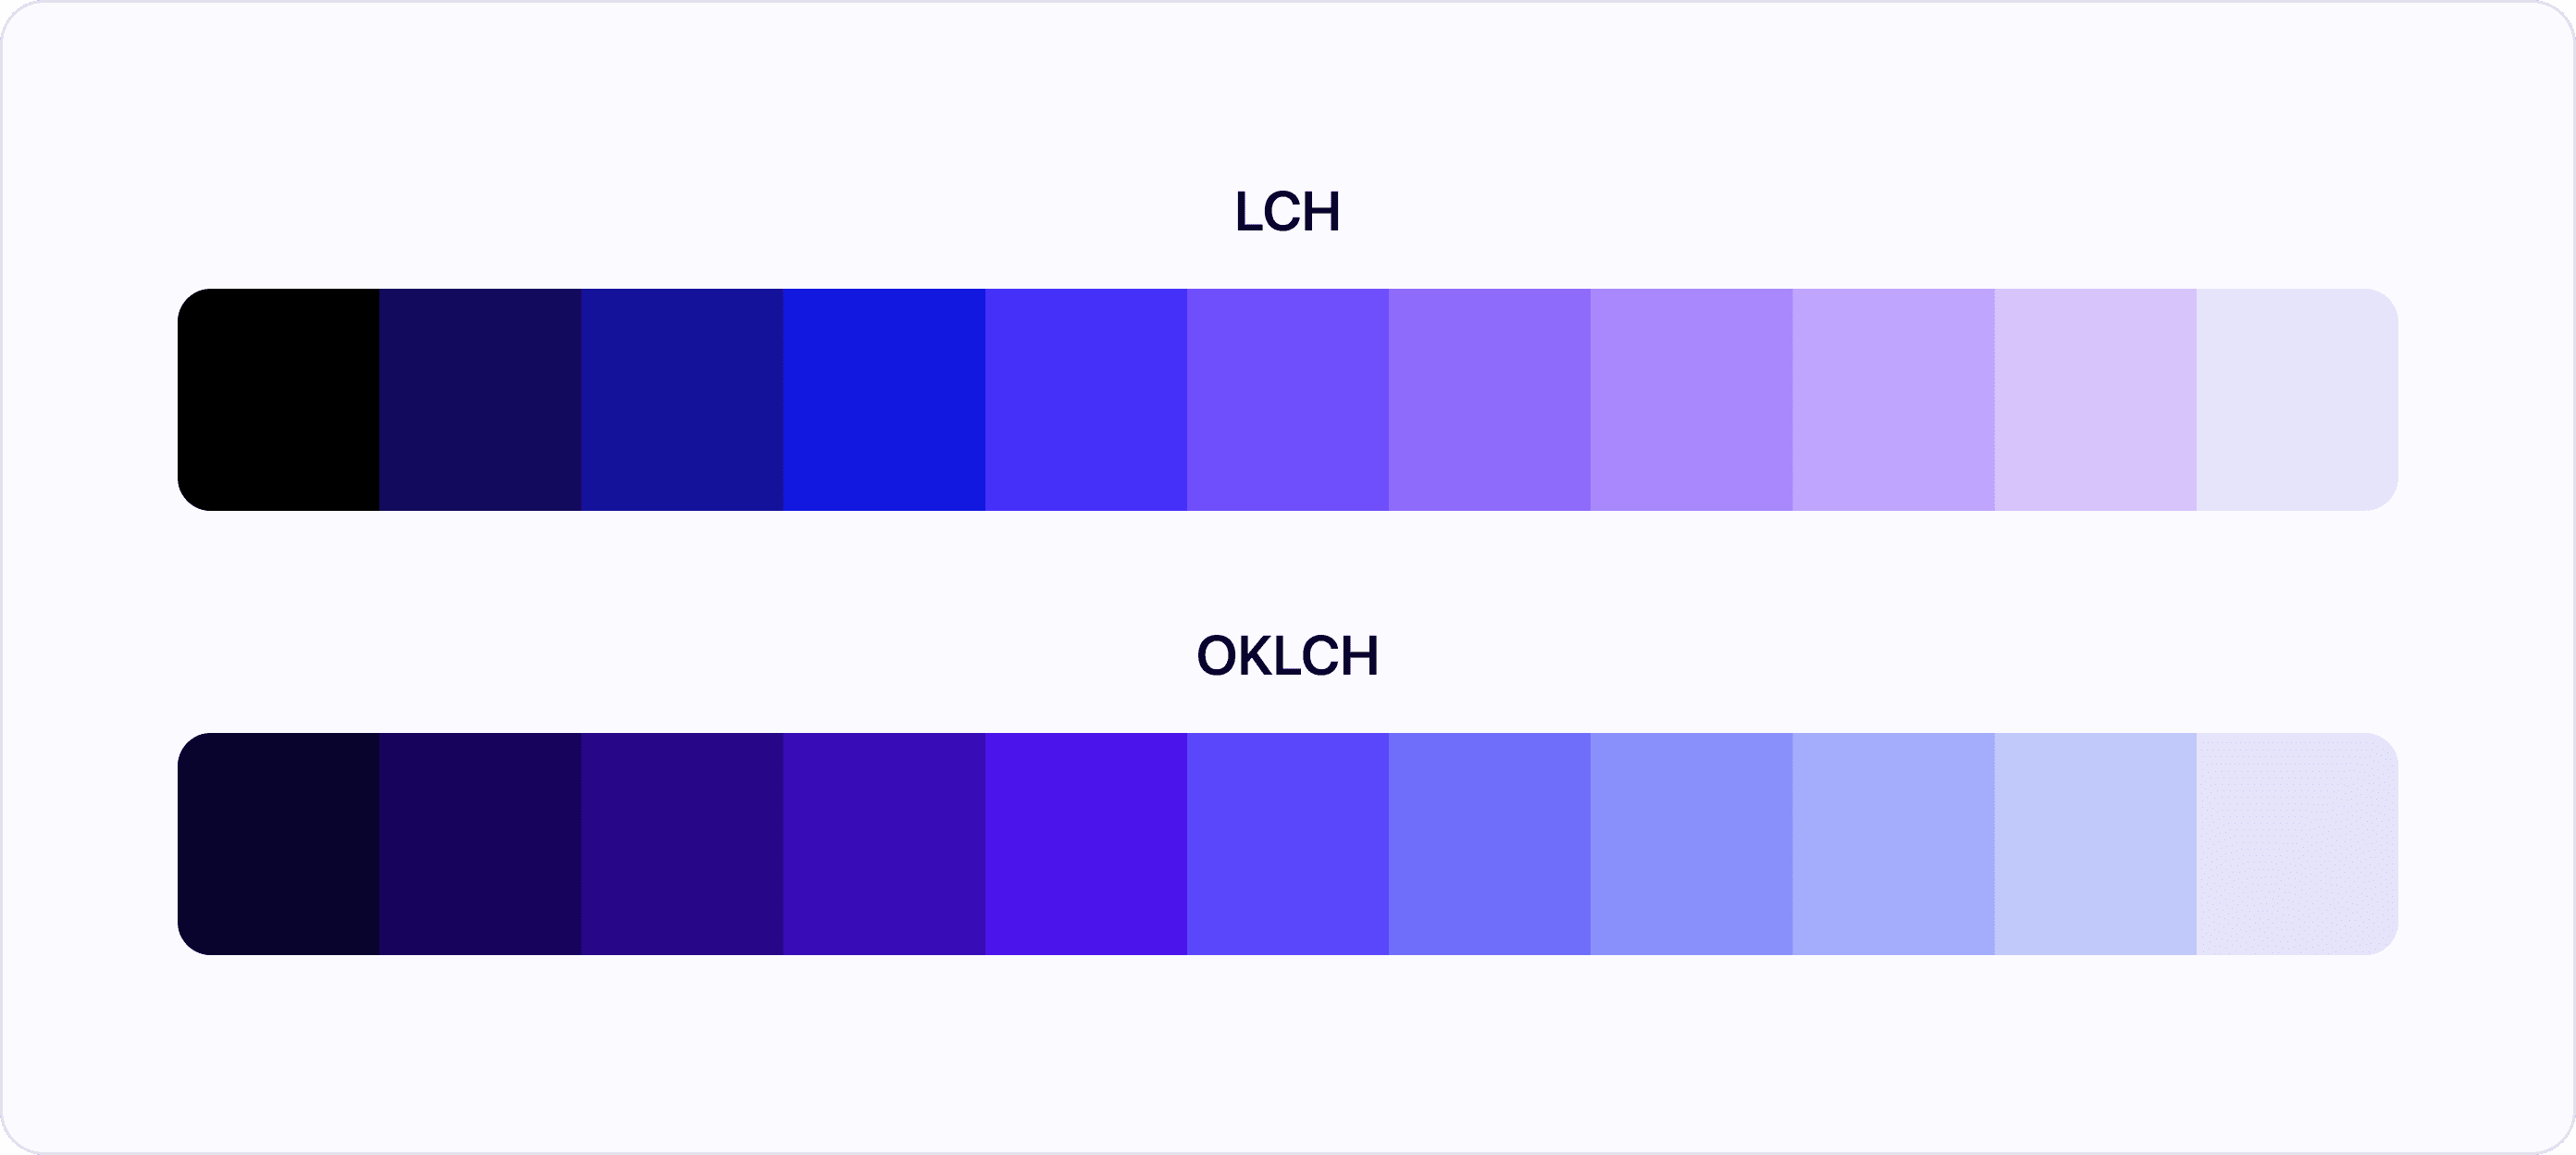 LCH and OKLCH blue hue comparison